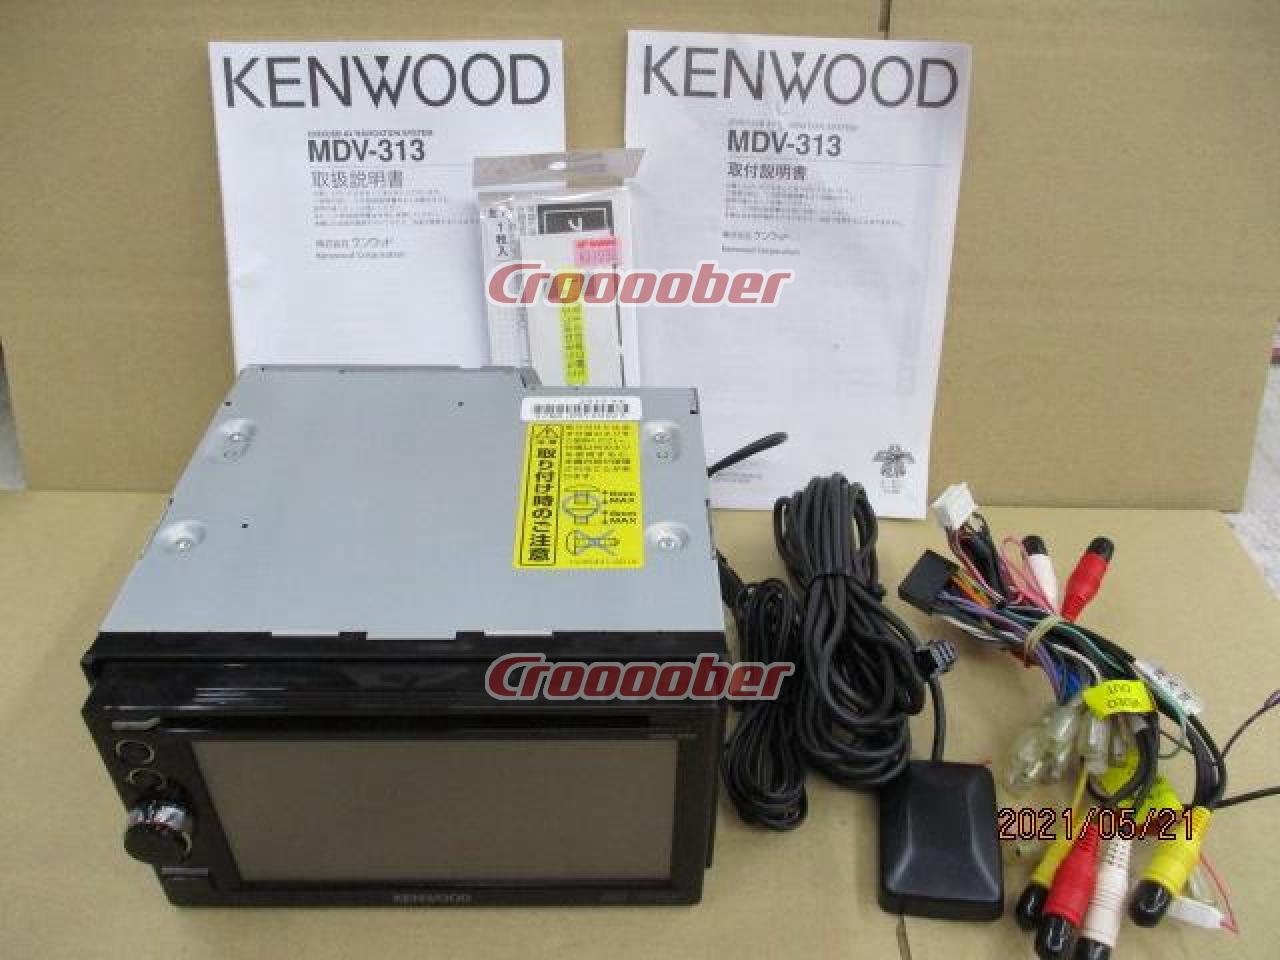 KENWOOD MDV-313 | Memory Navigation(digital) | Croooober